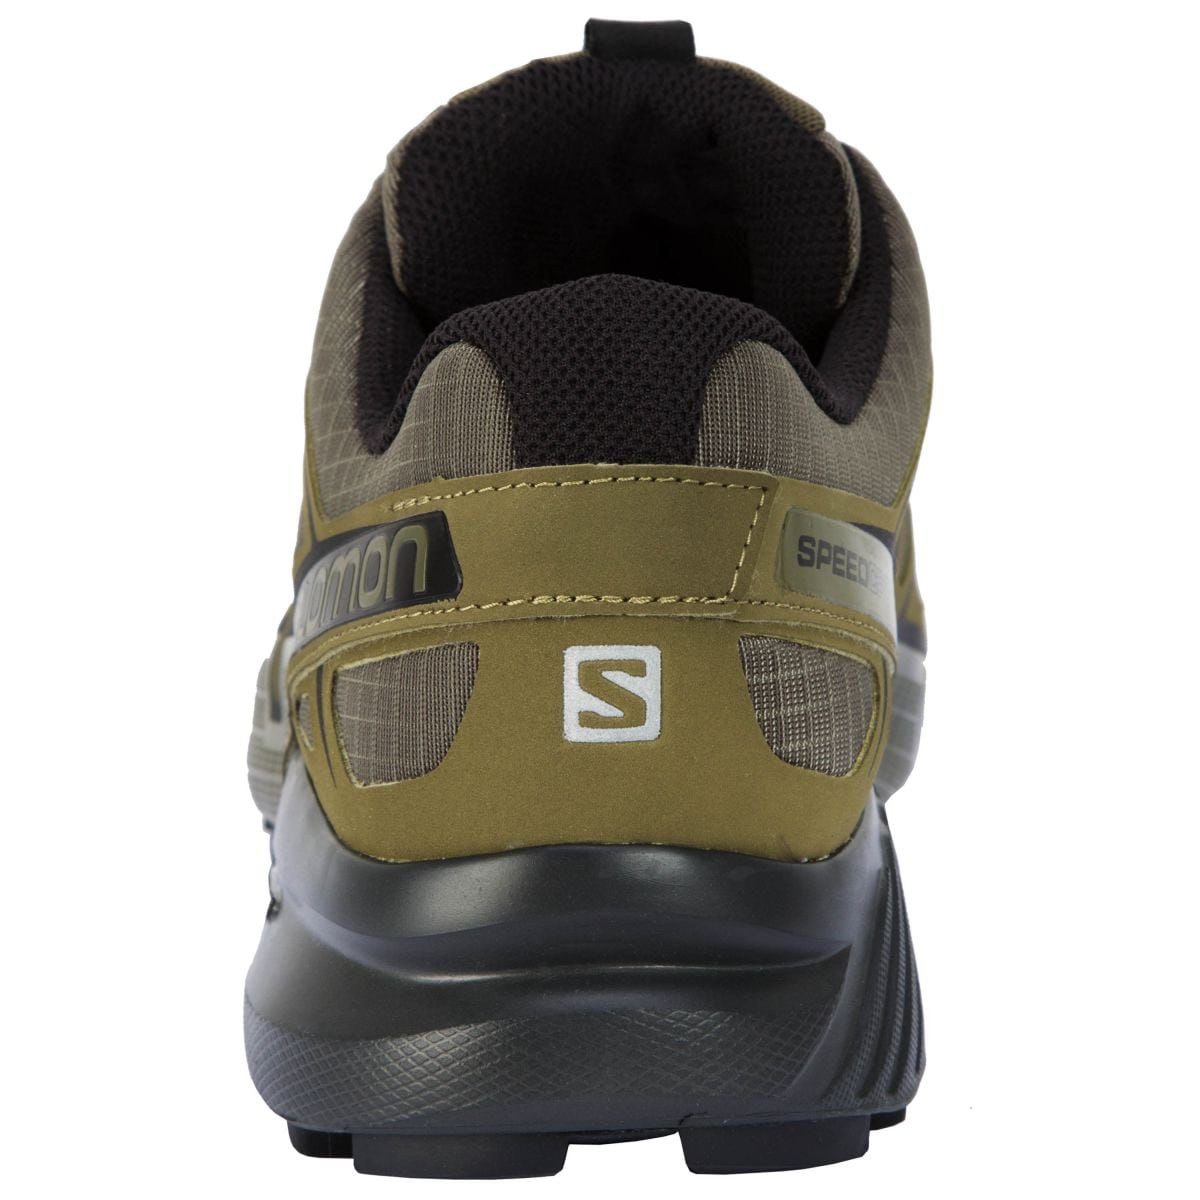 Salomon Shoes Speedcross 4 Wide olive/black